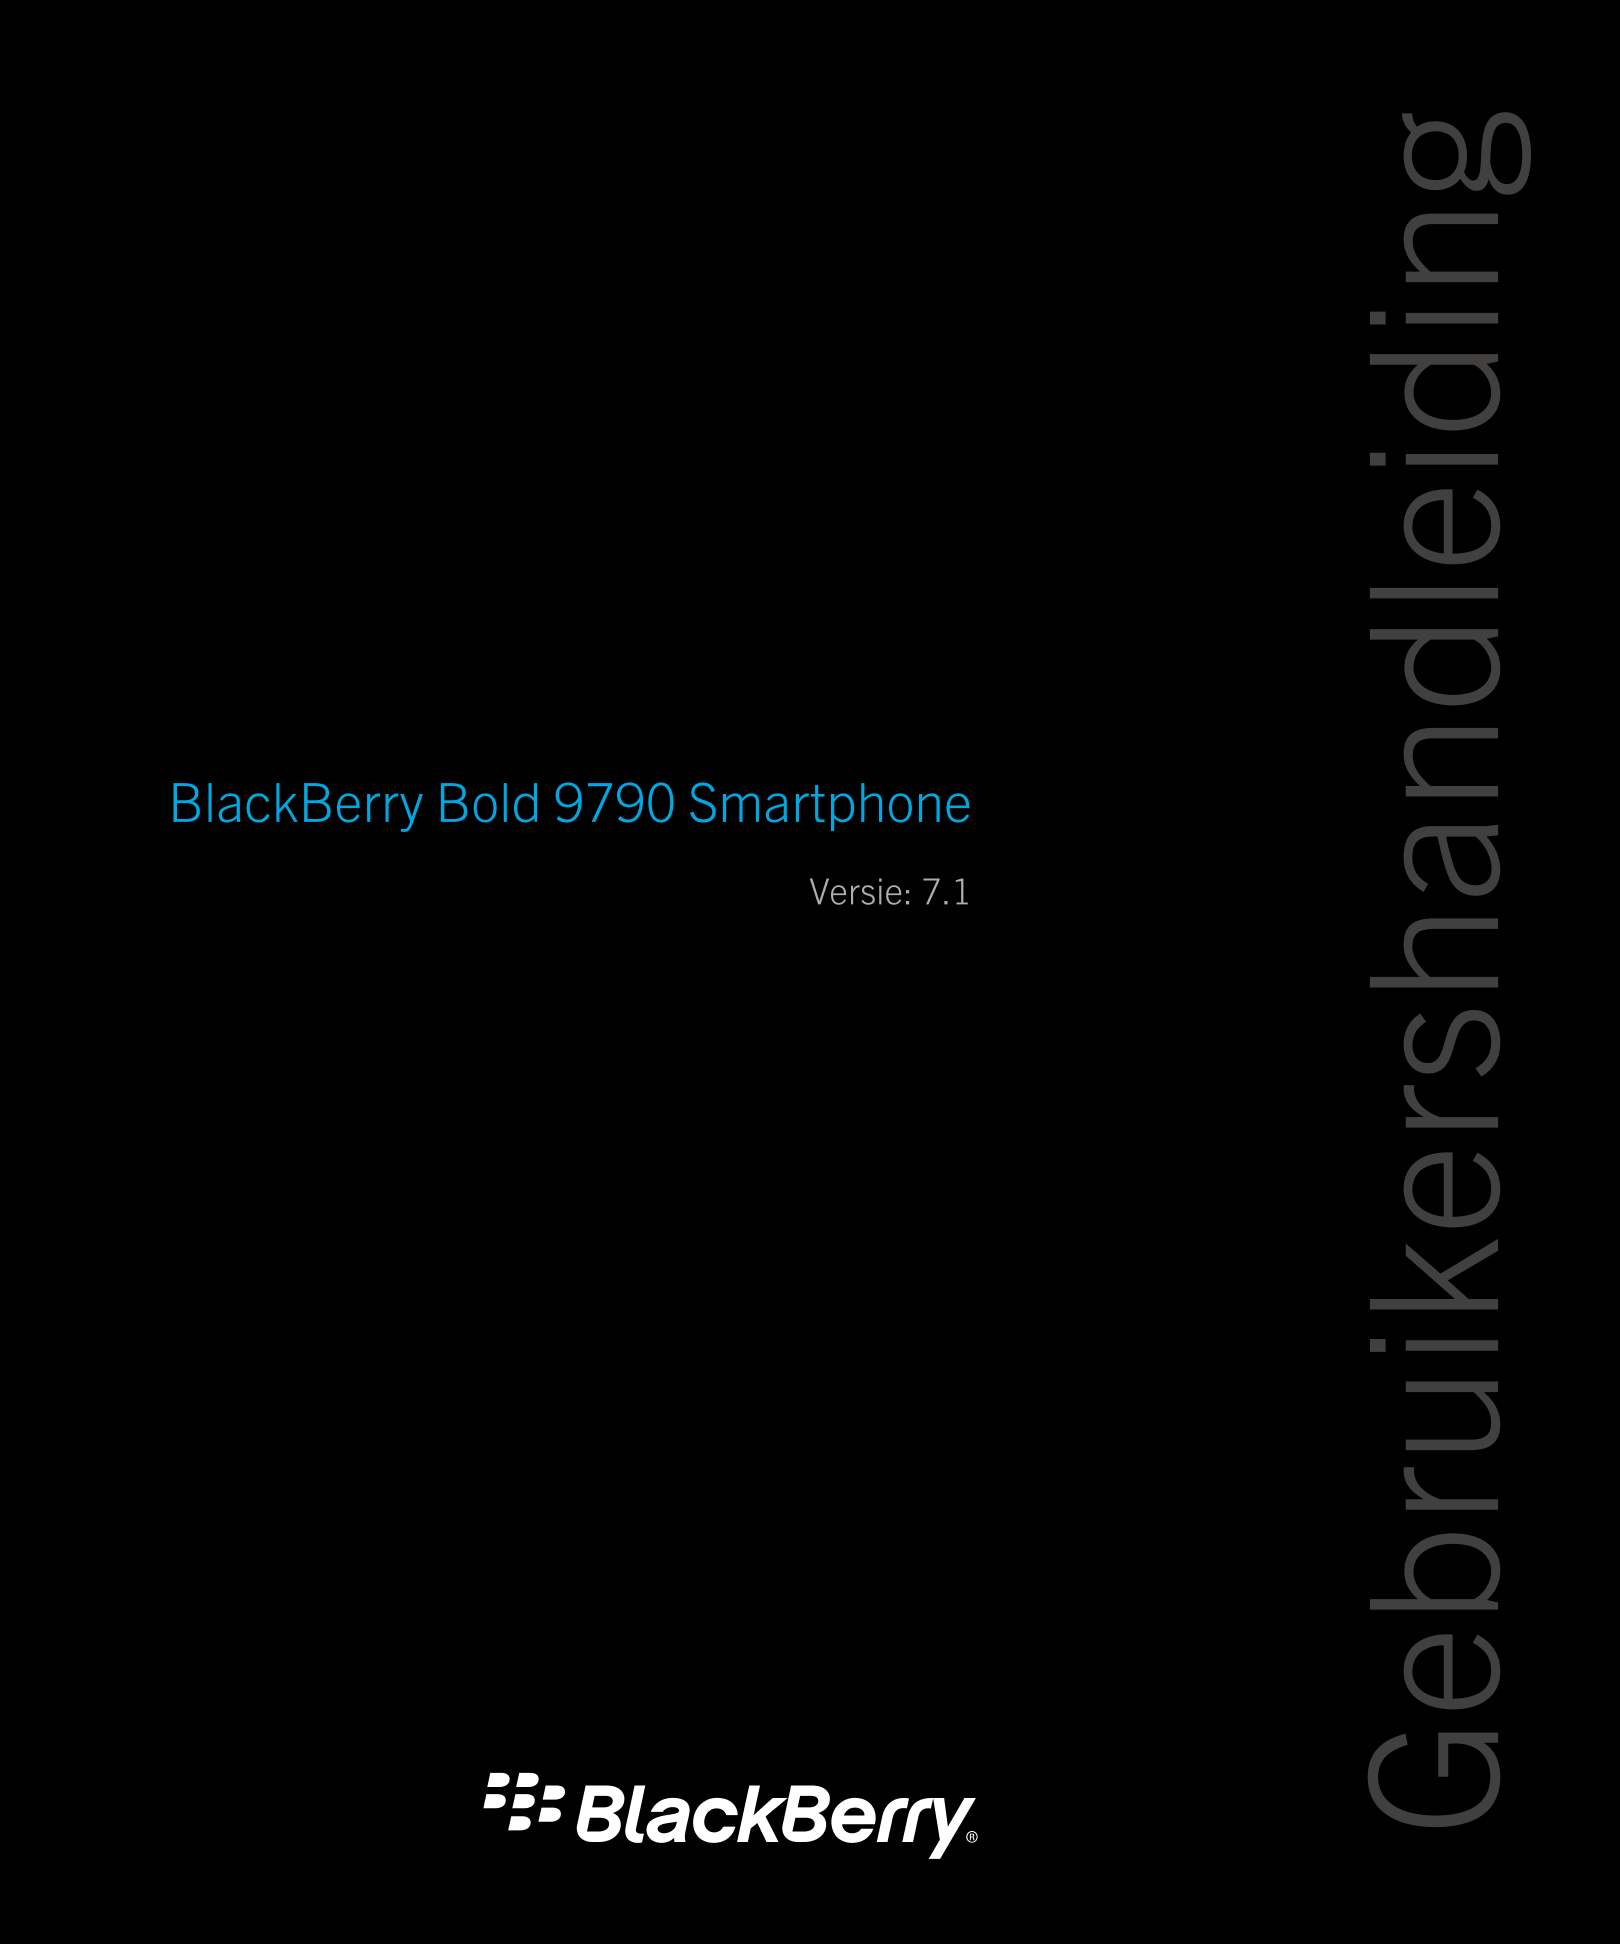 Gebruikershandleiding
BlackBerry Bold 9790 Smartphone
Versie: 7.1